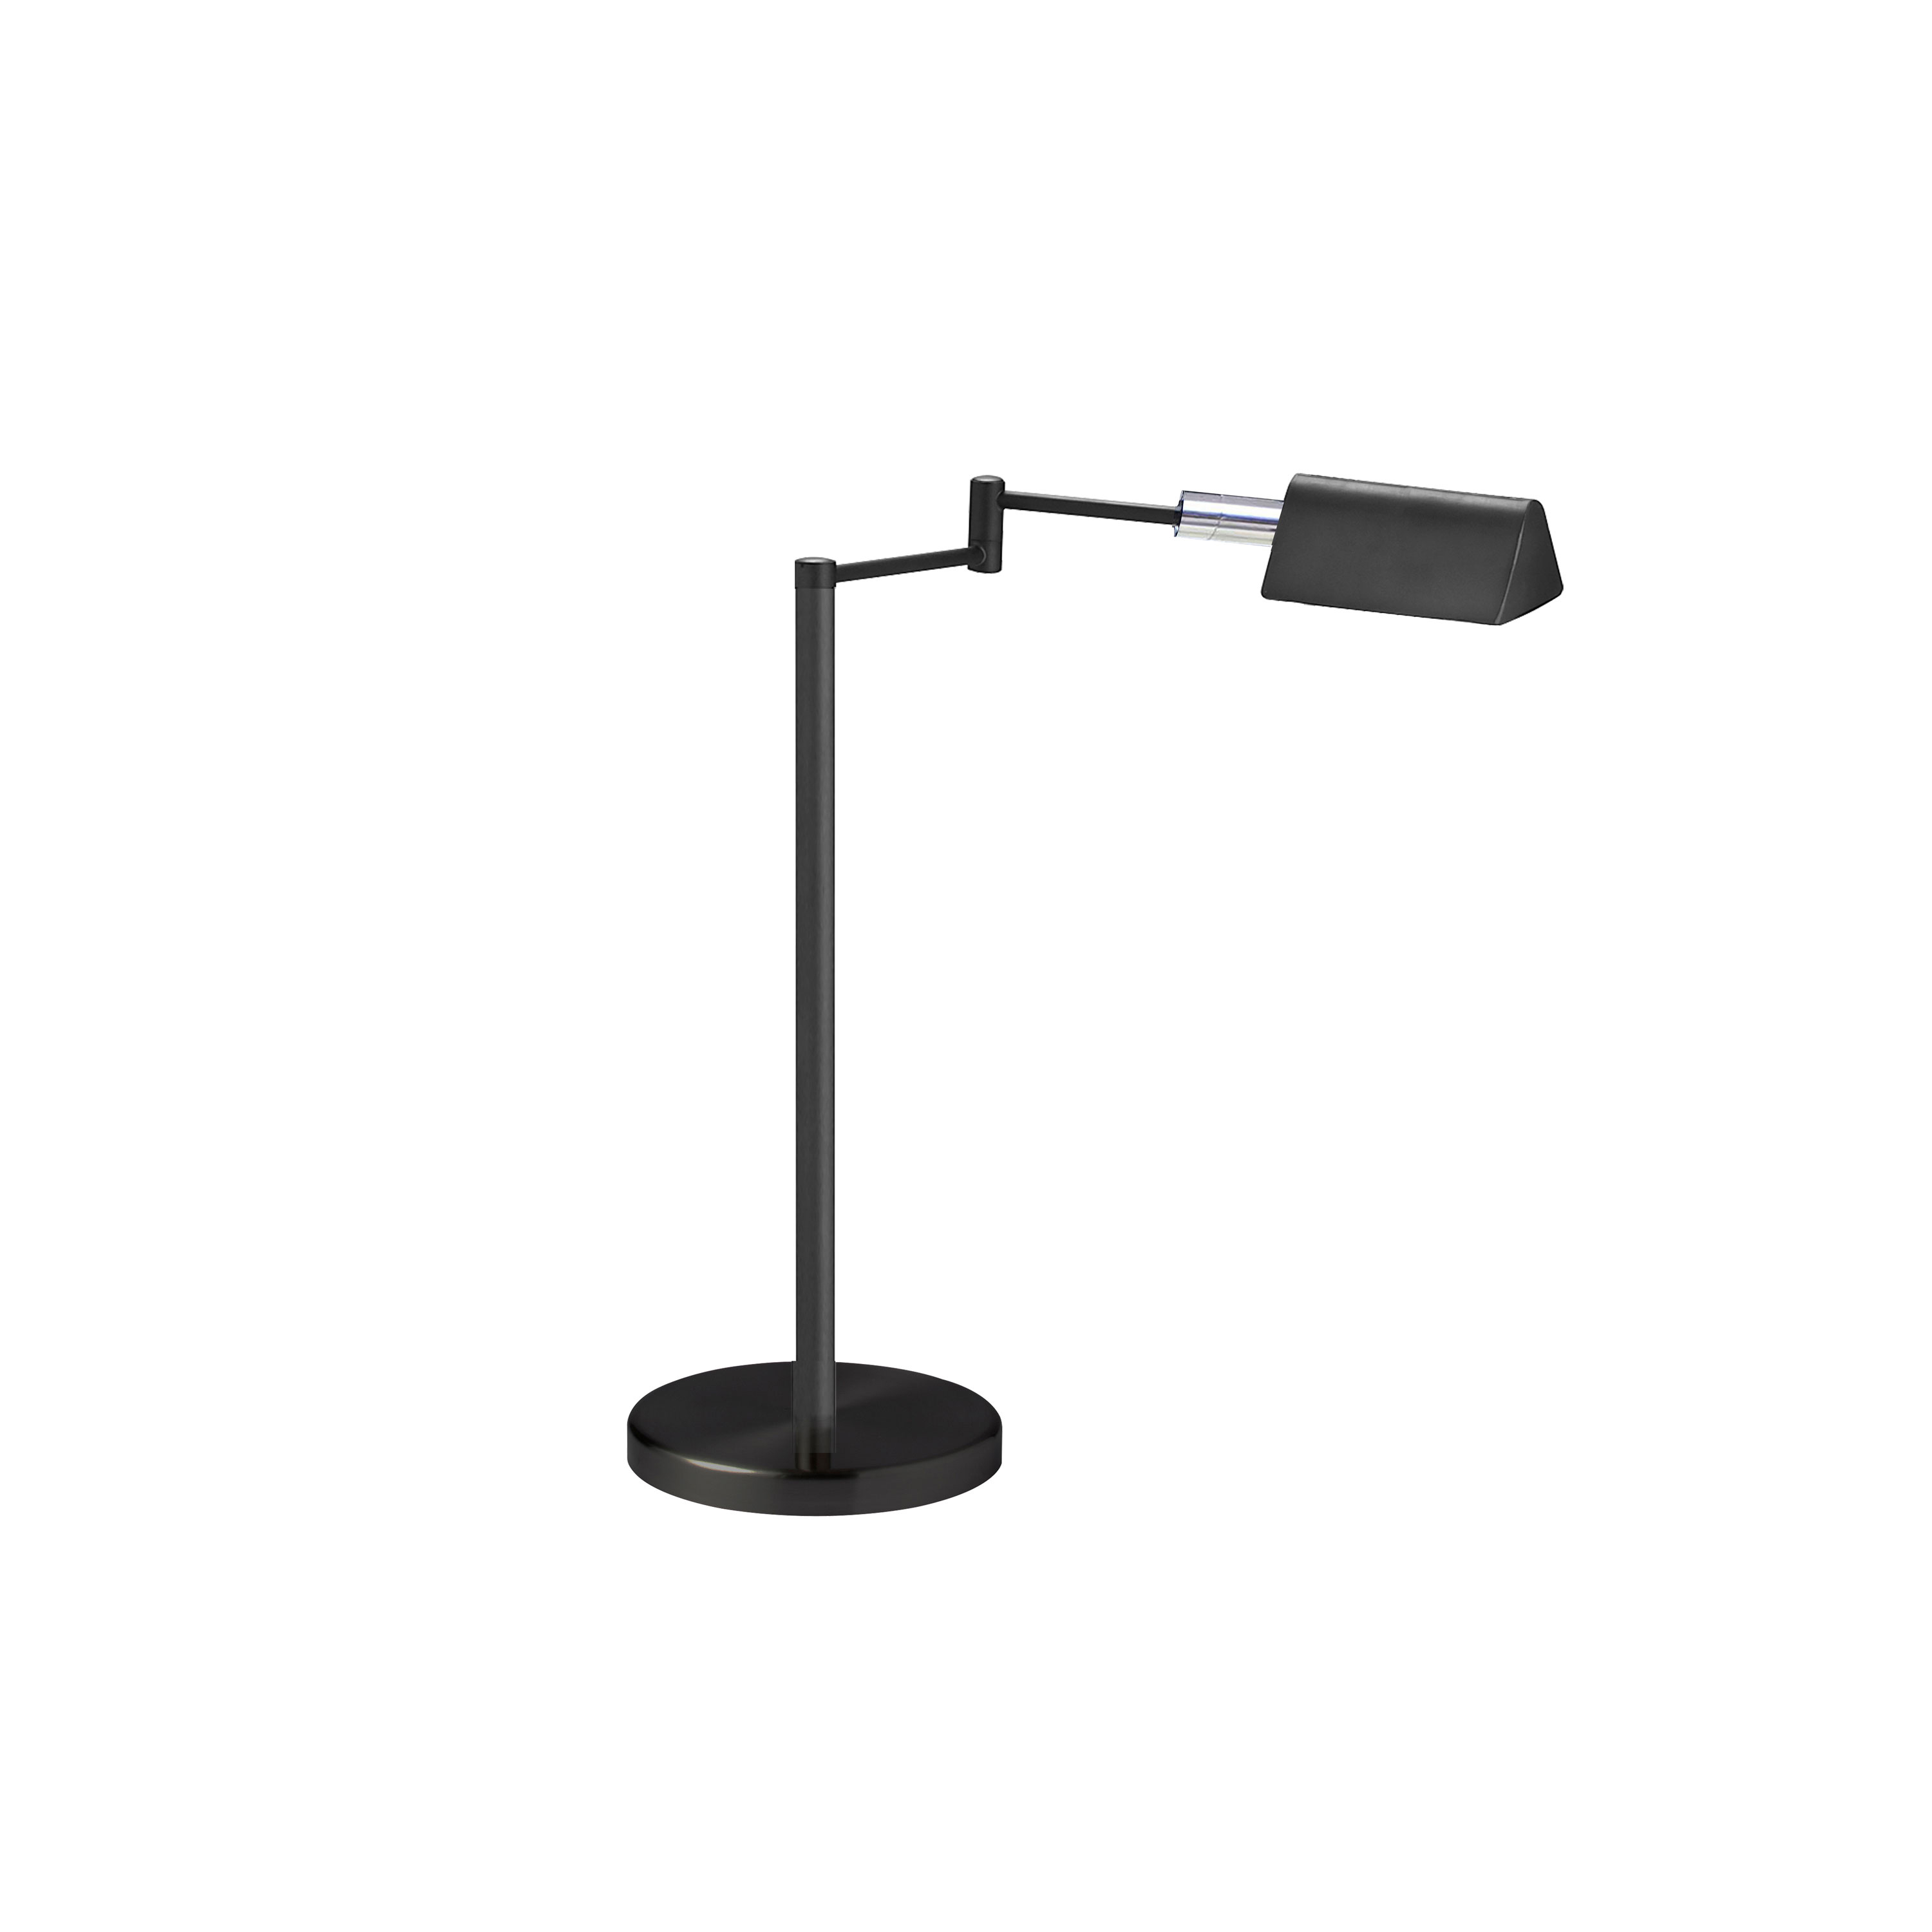 5W LED Swing Arm Table Lamp, Black Finish